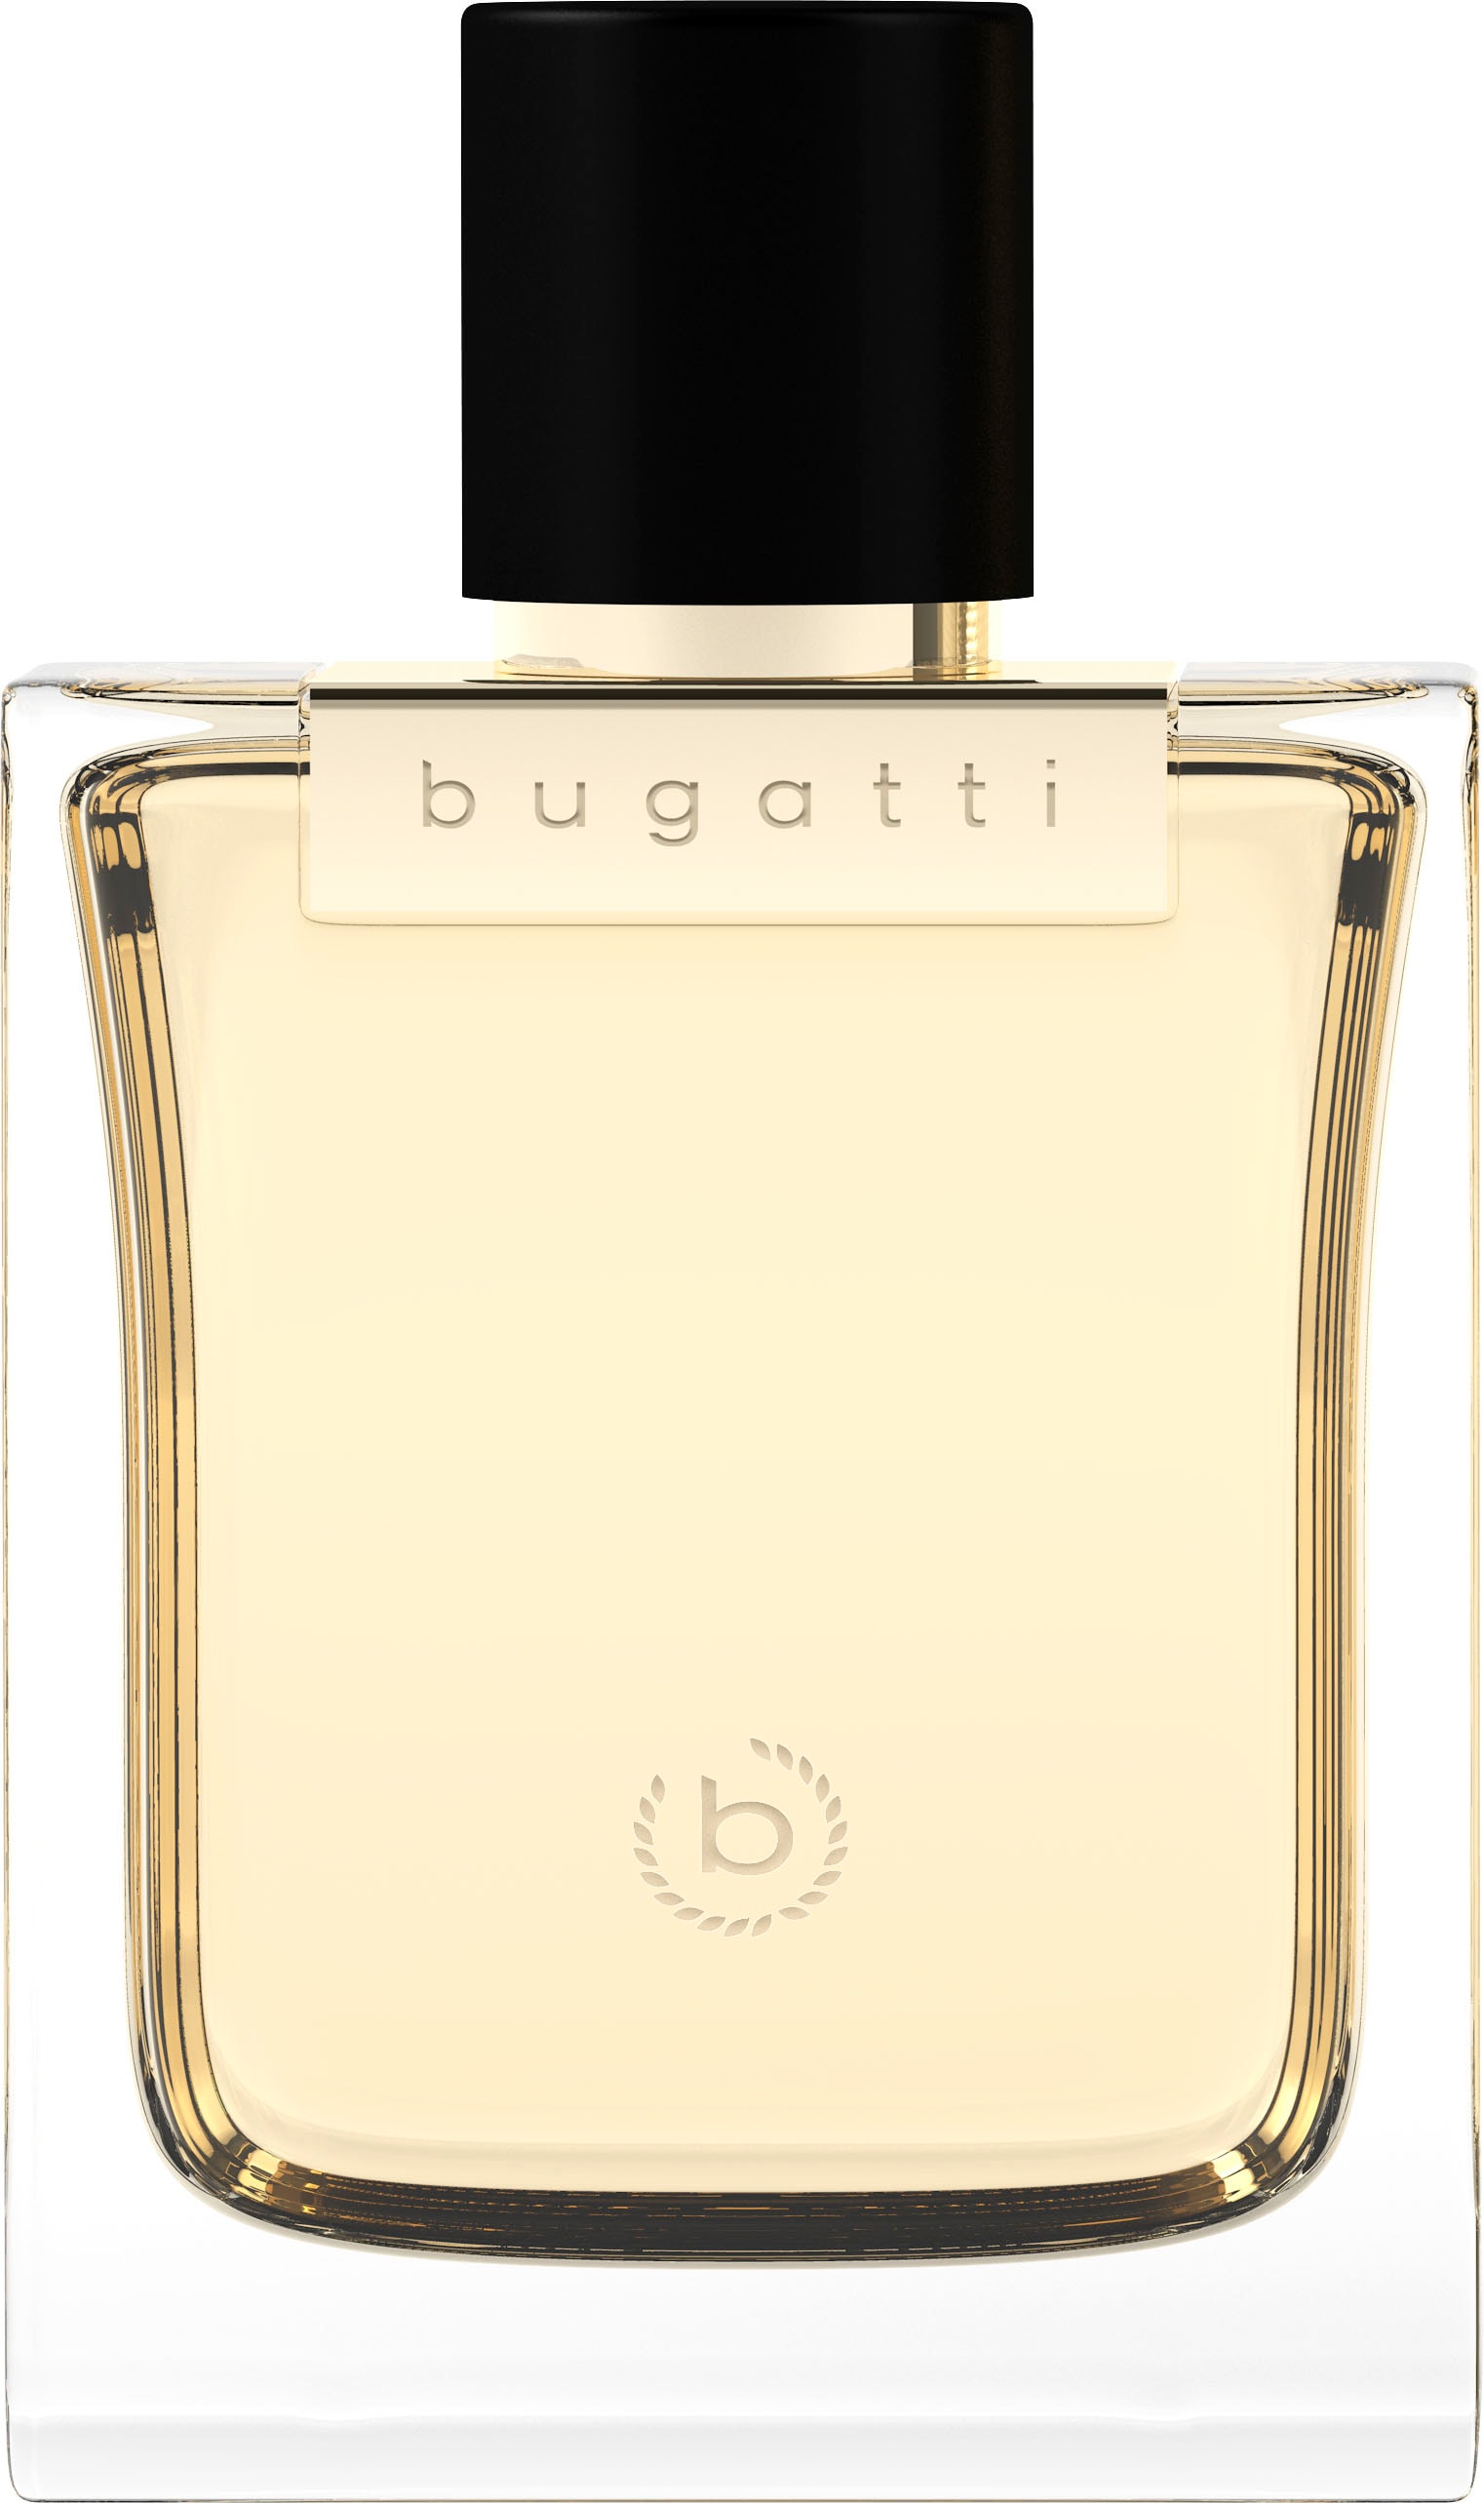 »BUGATTI EdP Bella Donna ml« Parfum de online bugatti bestellen Gold 60 Eau